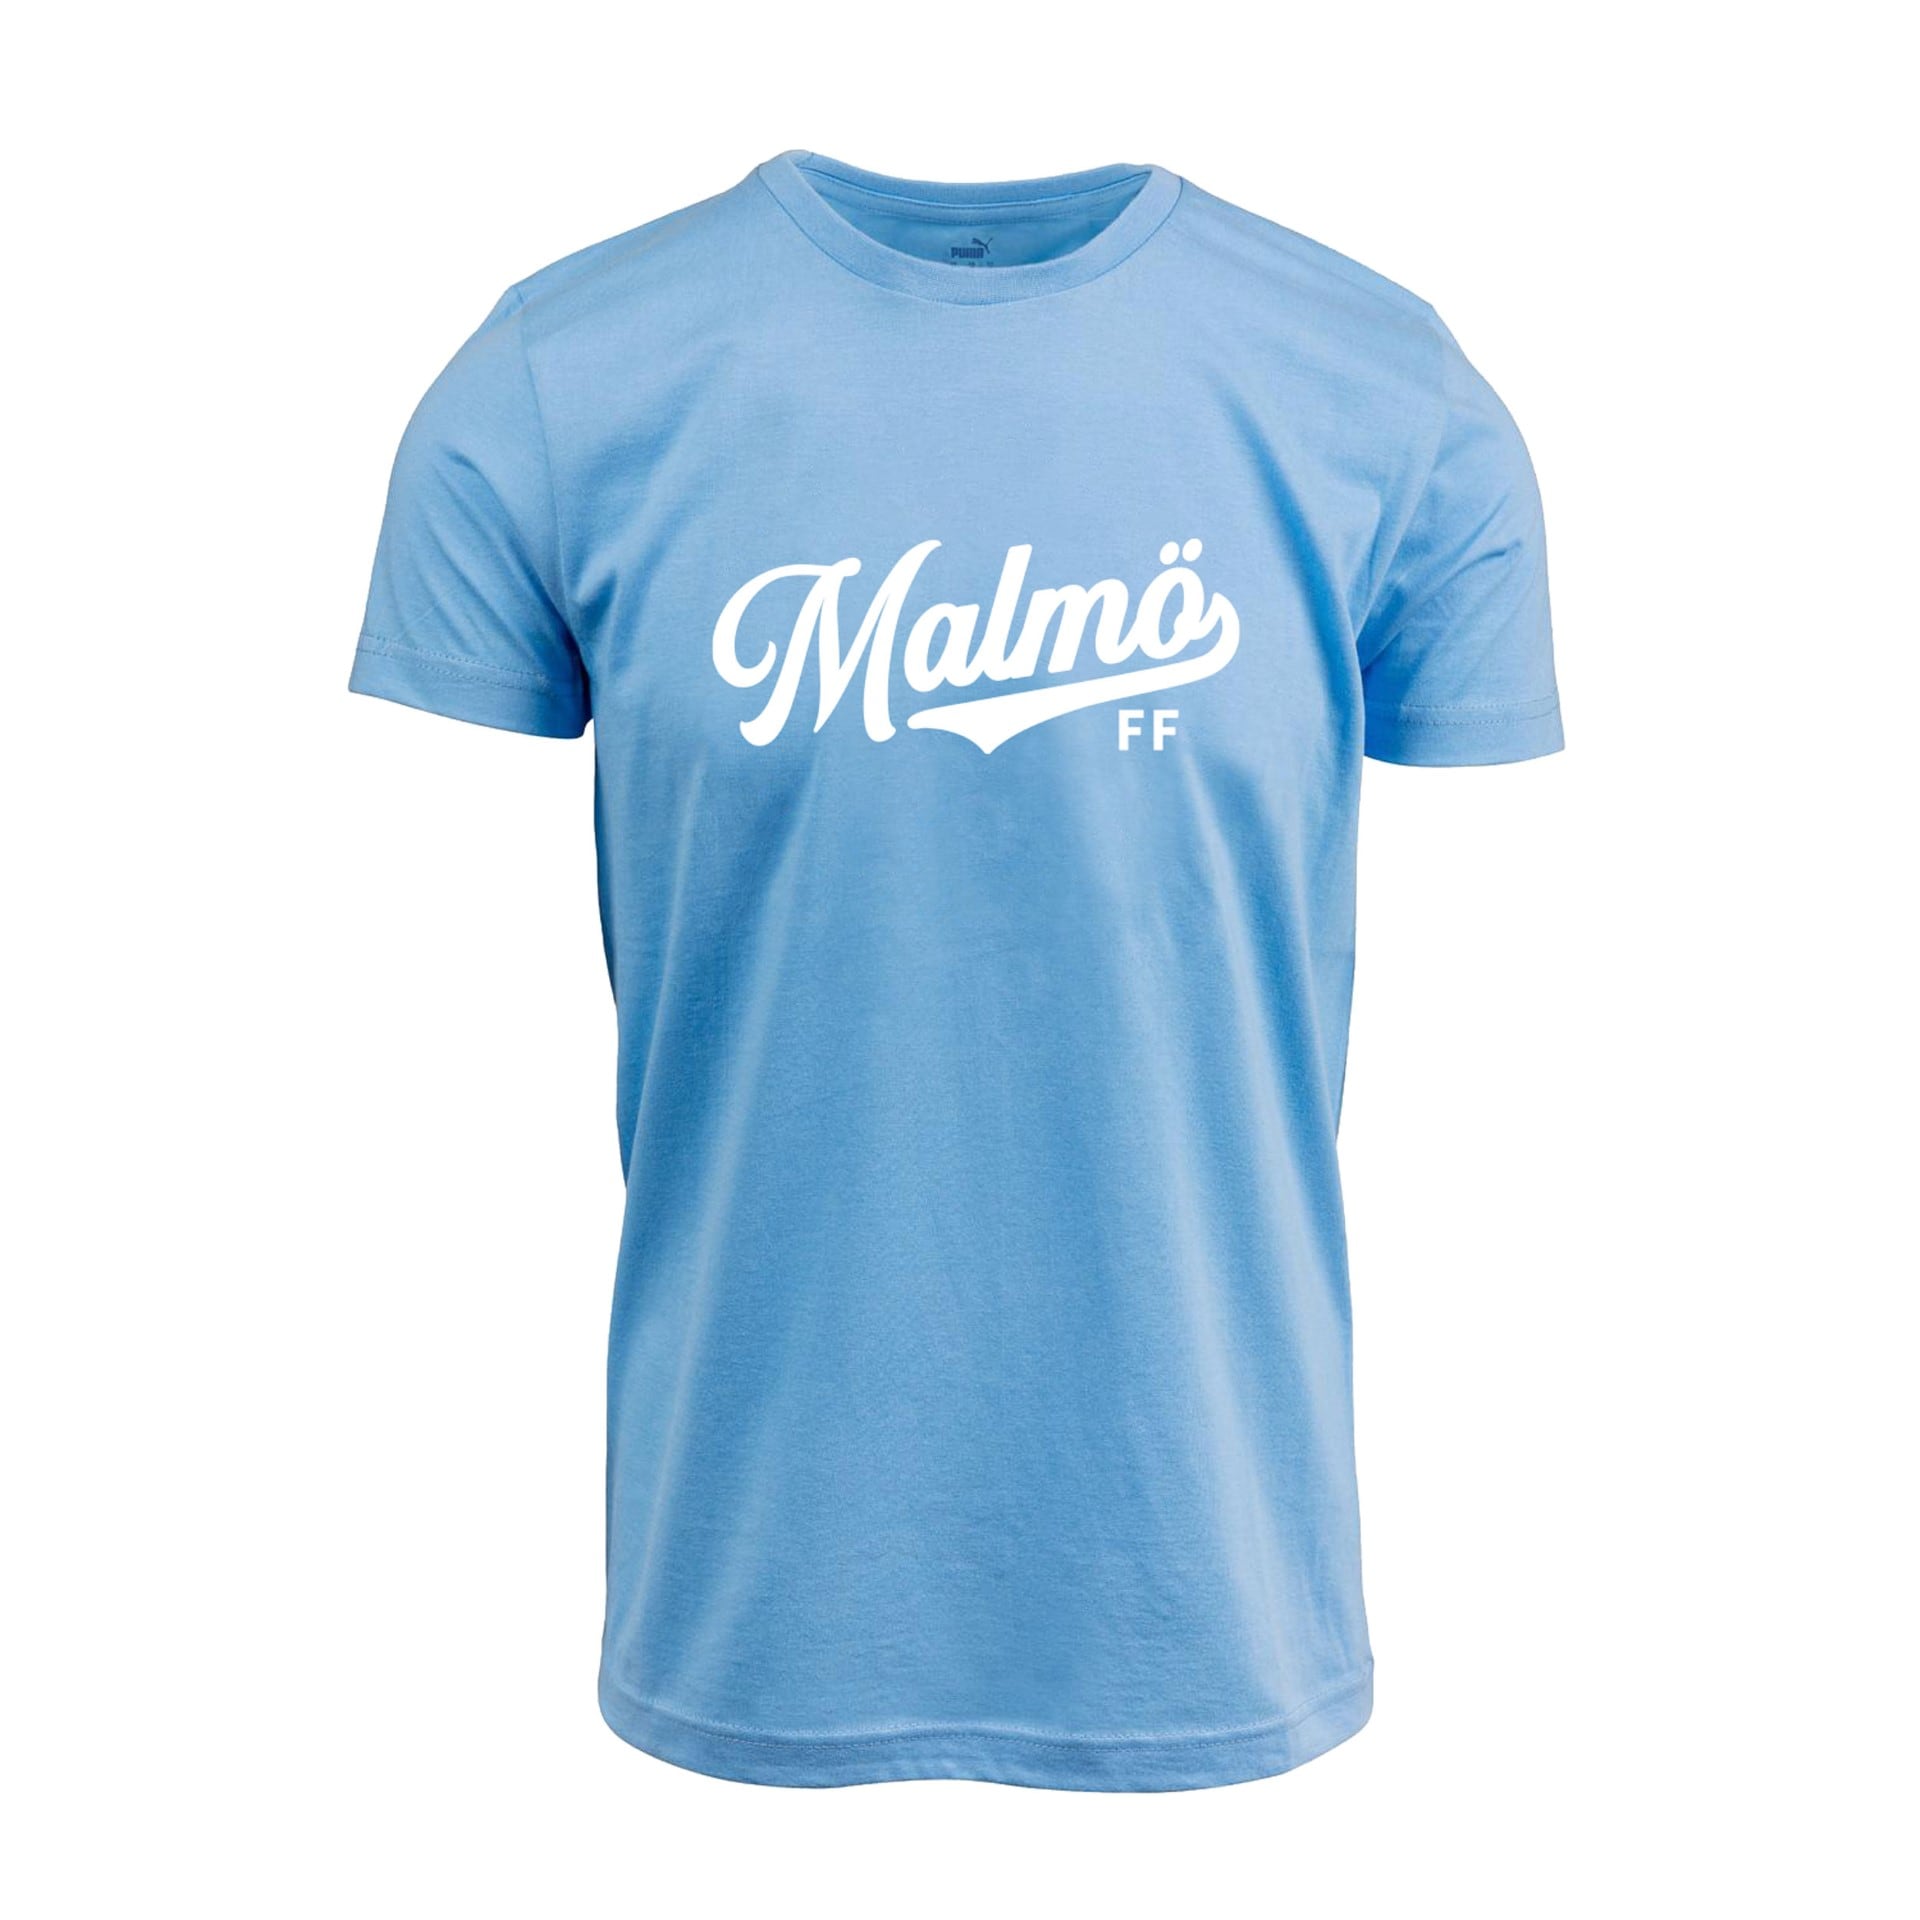 Puma t-shirt barn ljusblå Malmö FF